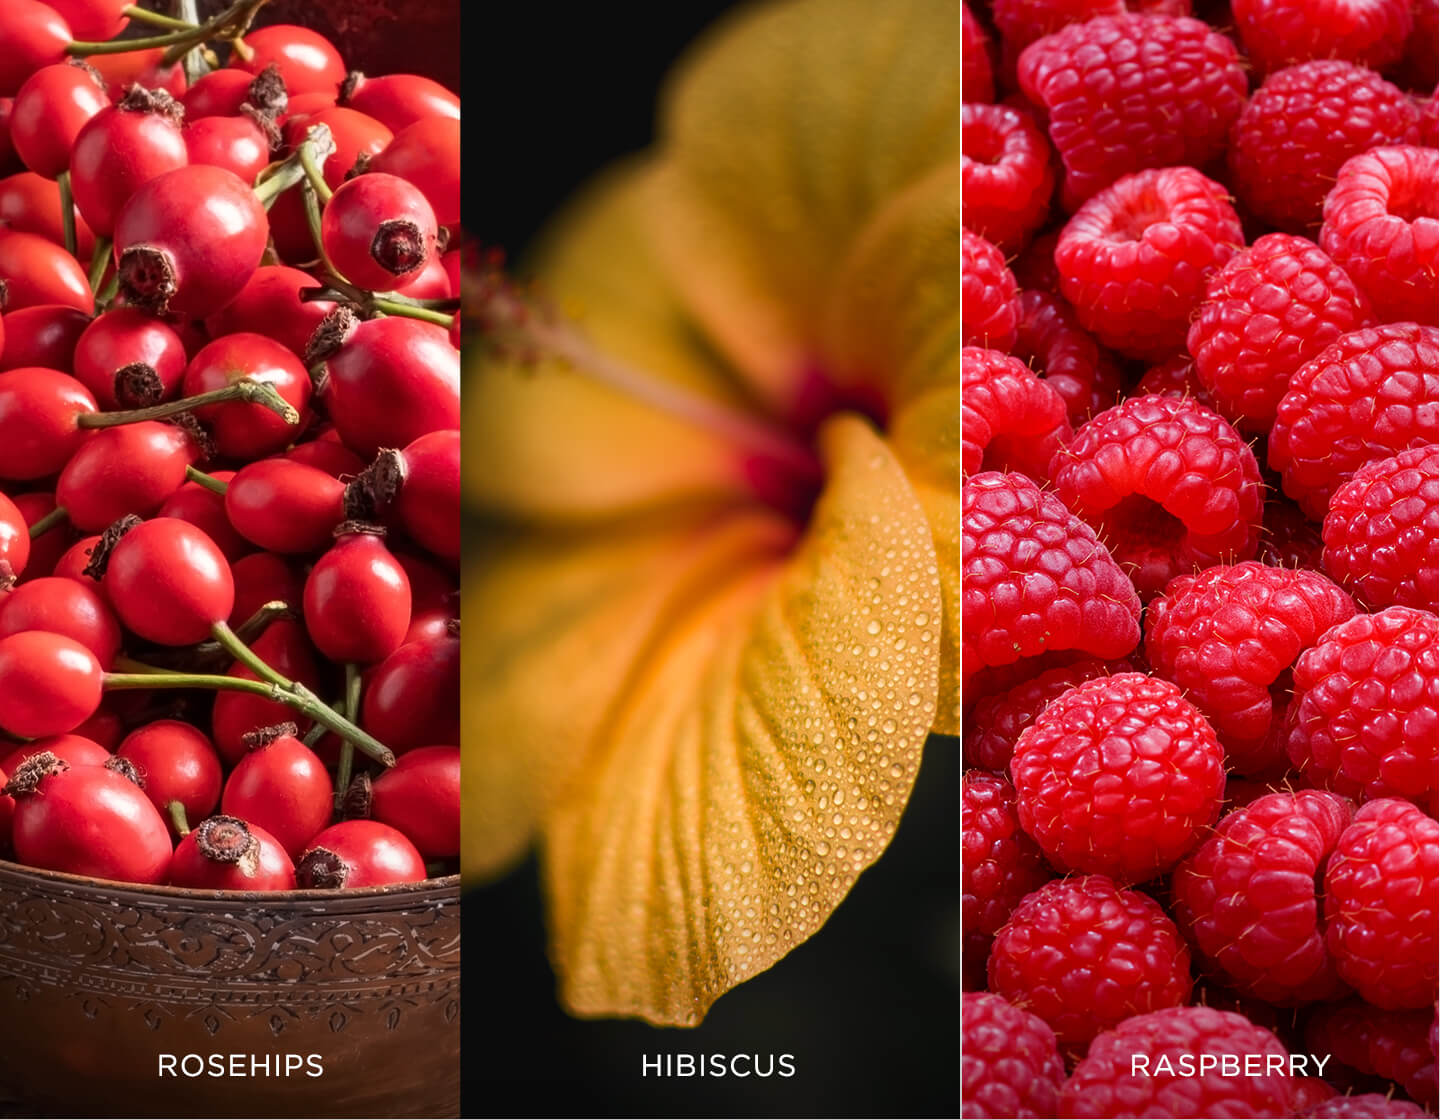 Raspberry Nectar ingredients: Rosehips, Hibiscus and raspberries